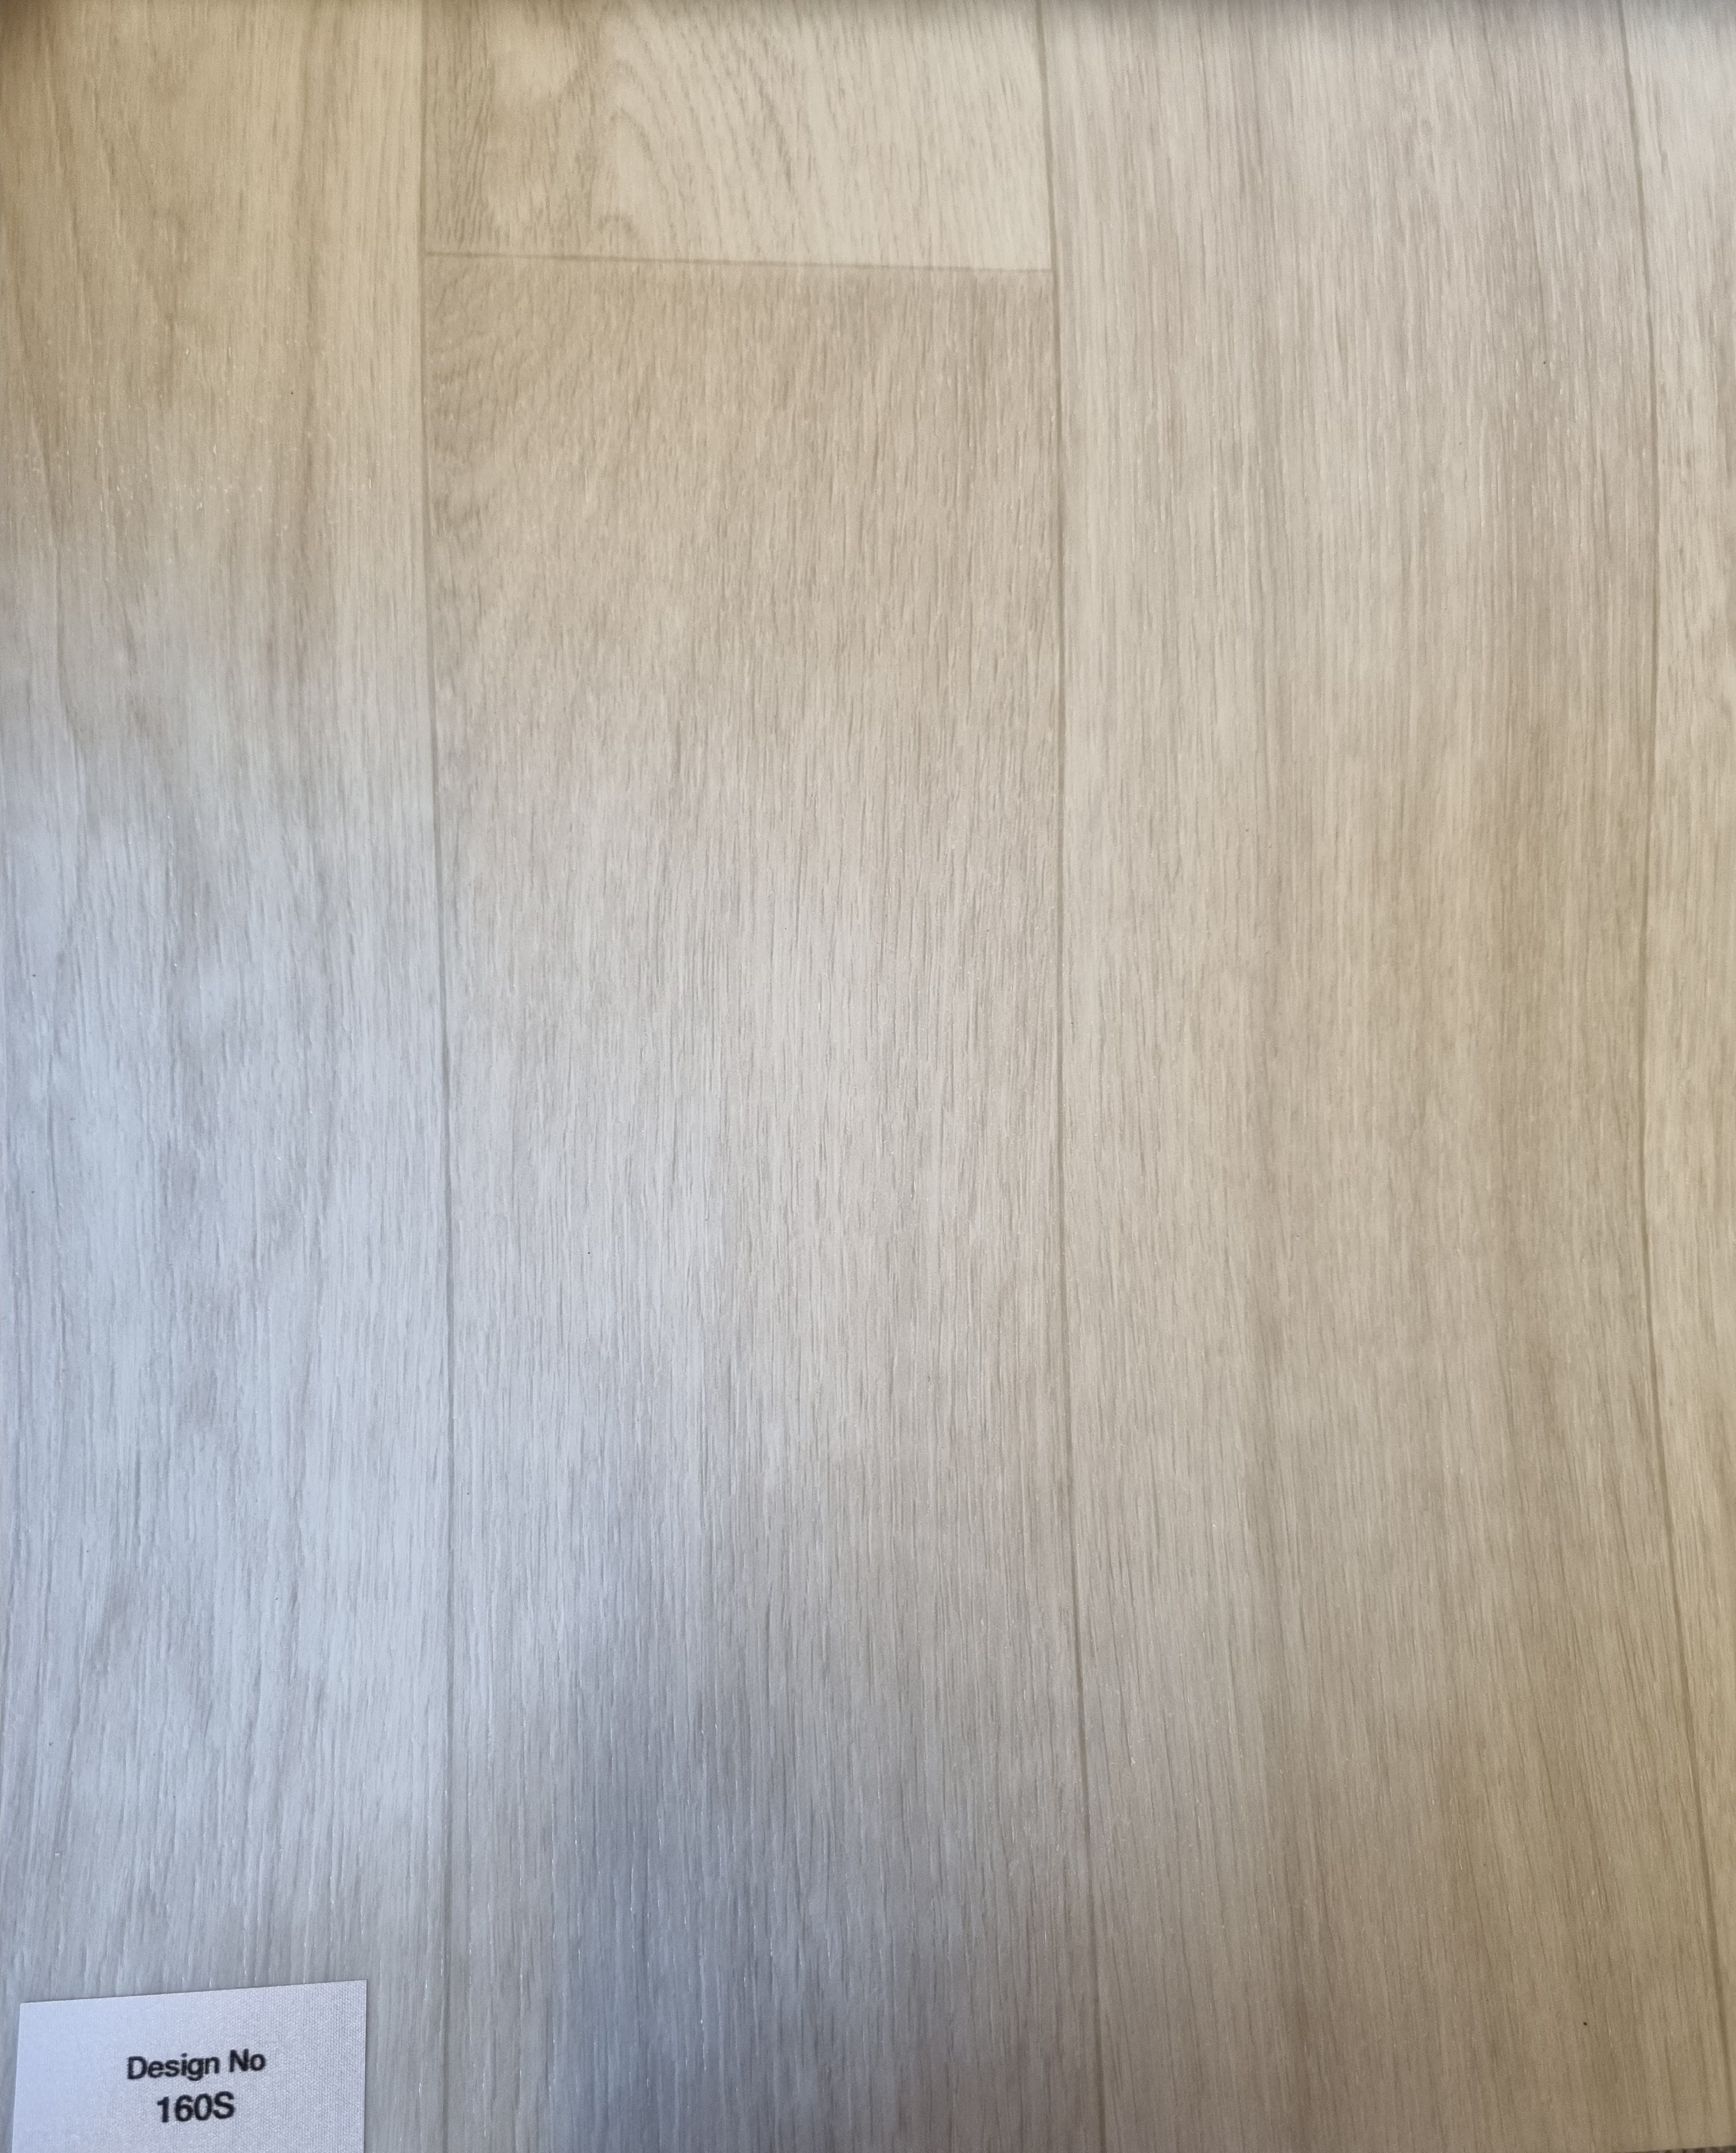 Oakwood vinyl flooring